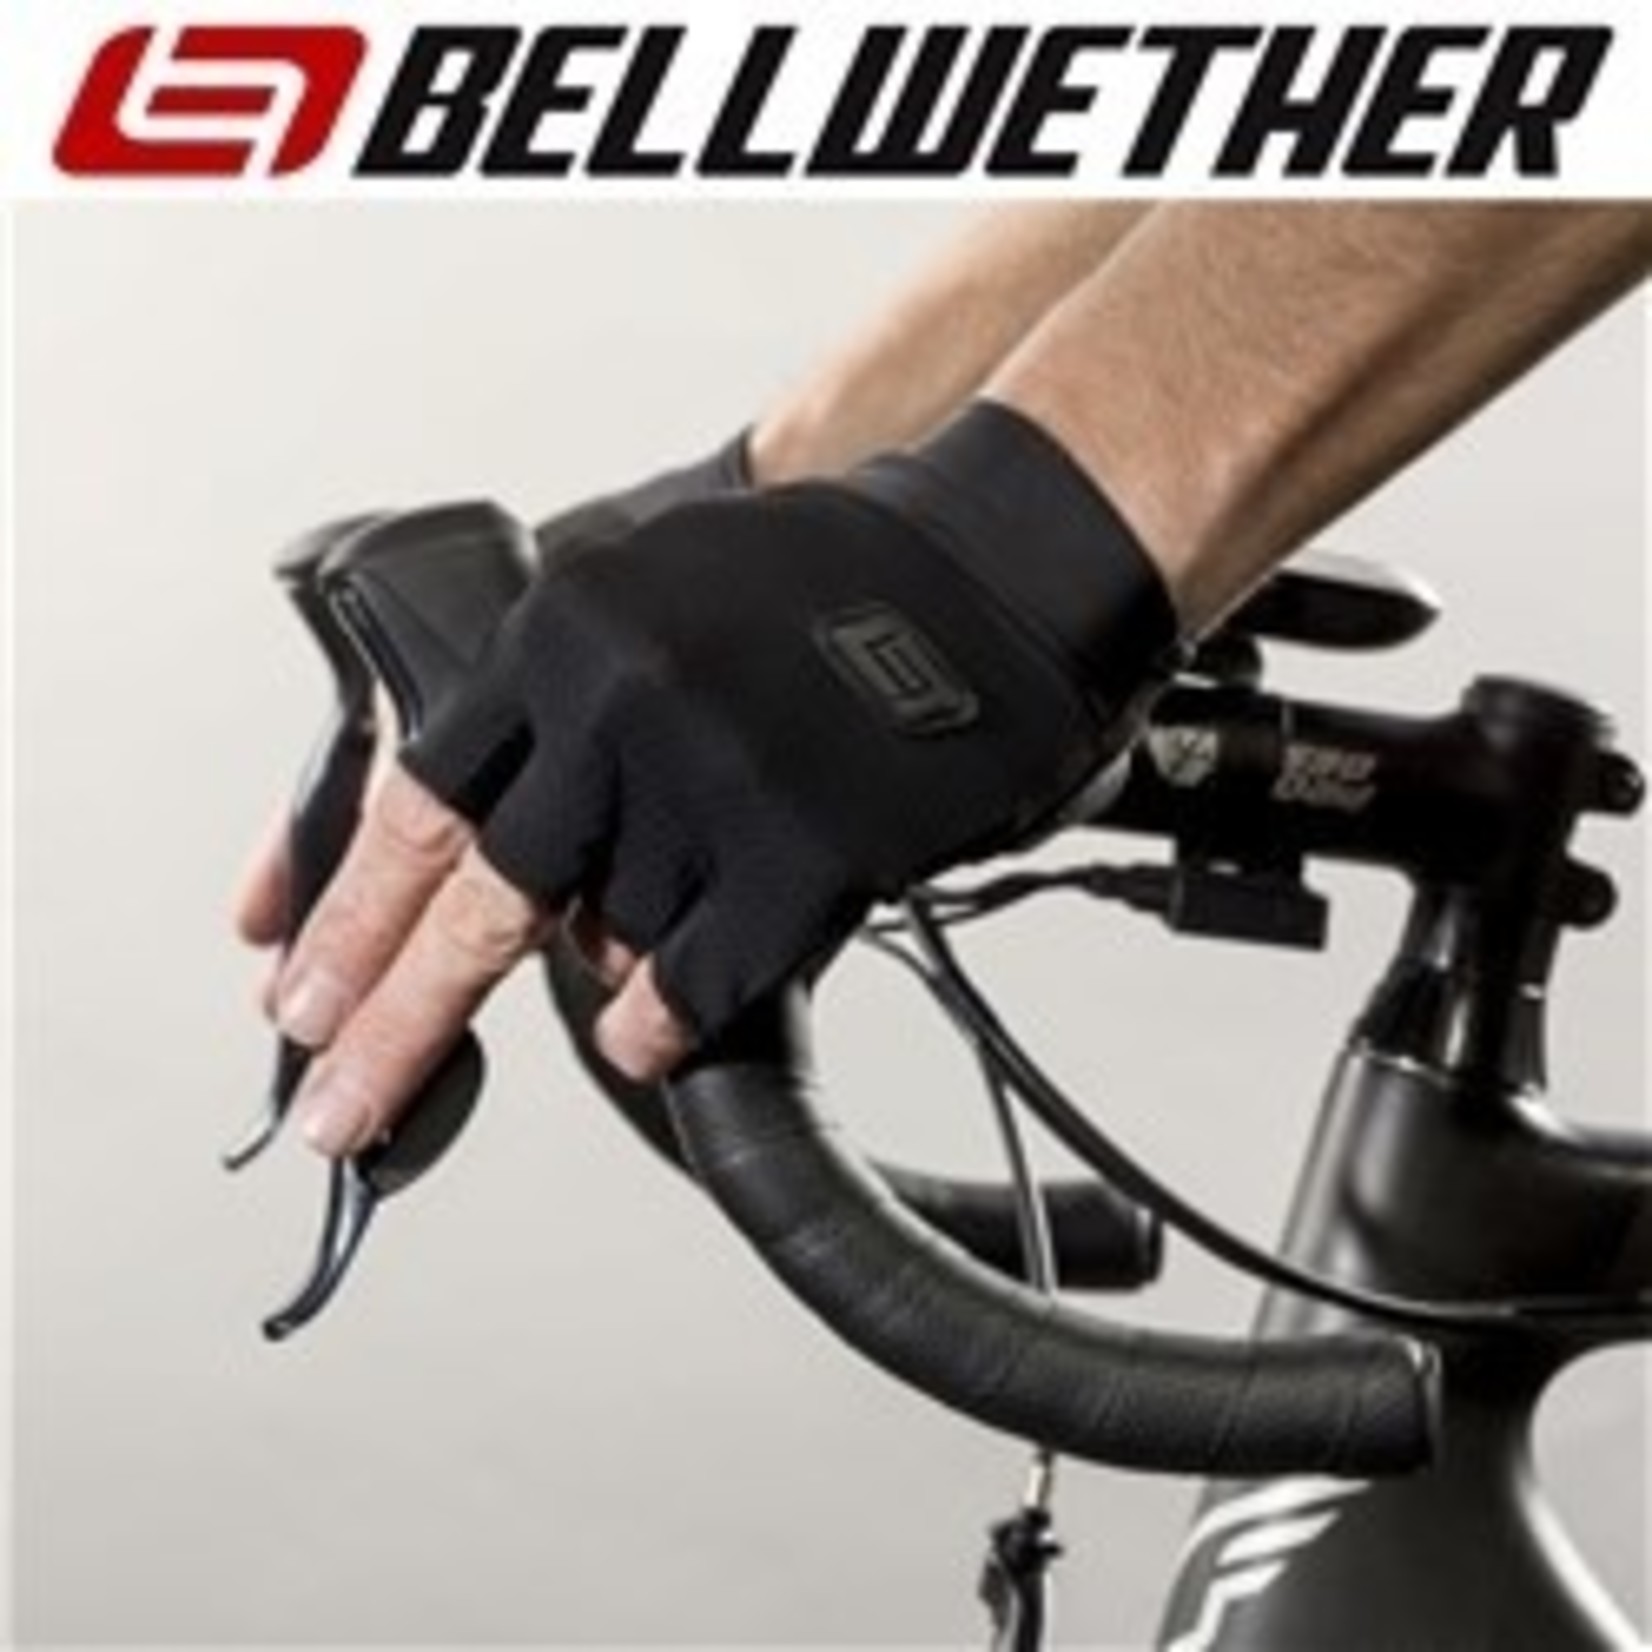 Bellwether Bellwether Cycling/Bike Gloves - Ultra-Lightweight - Pursuit Gel - Black